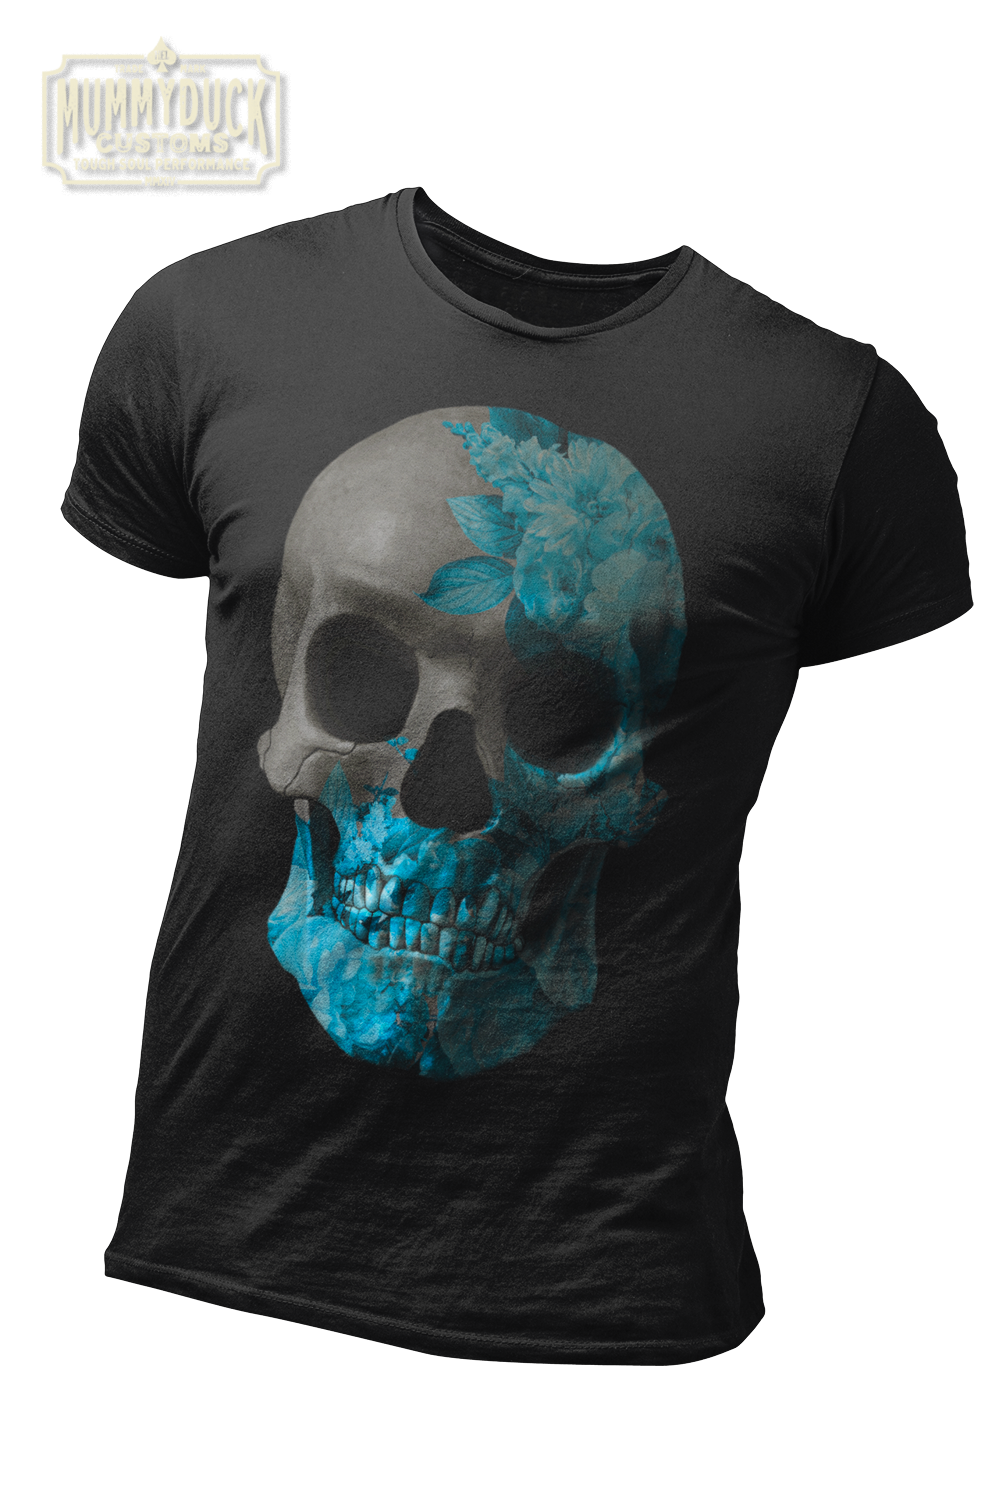 black t-shirt with blue flower texture skull